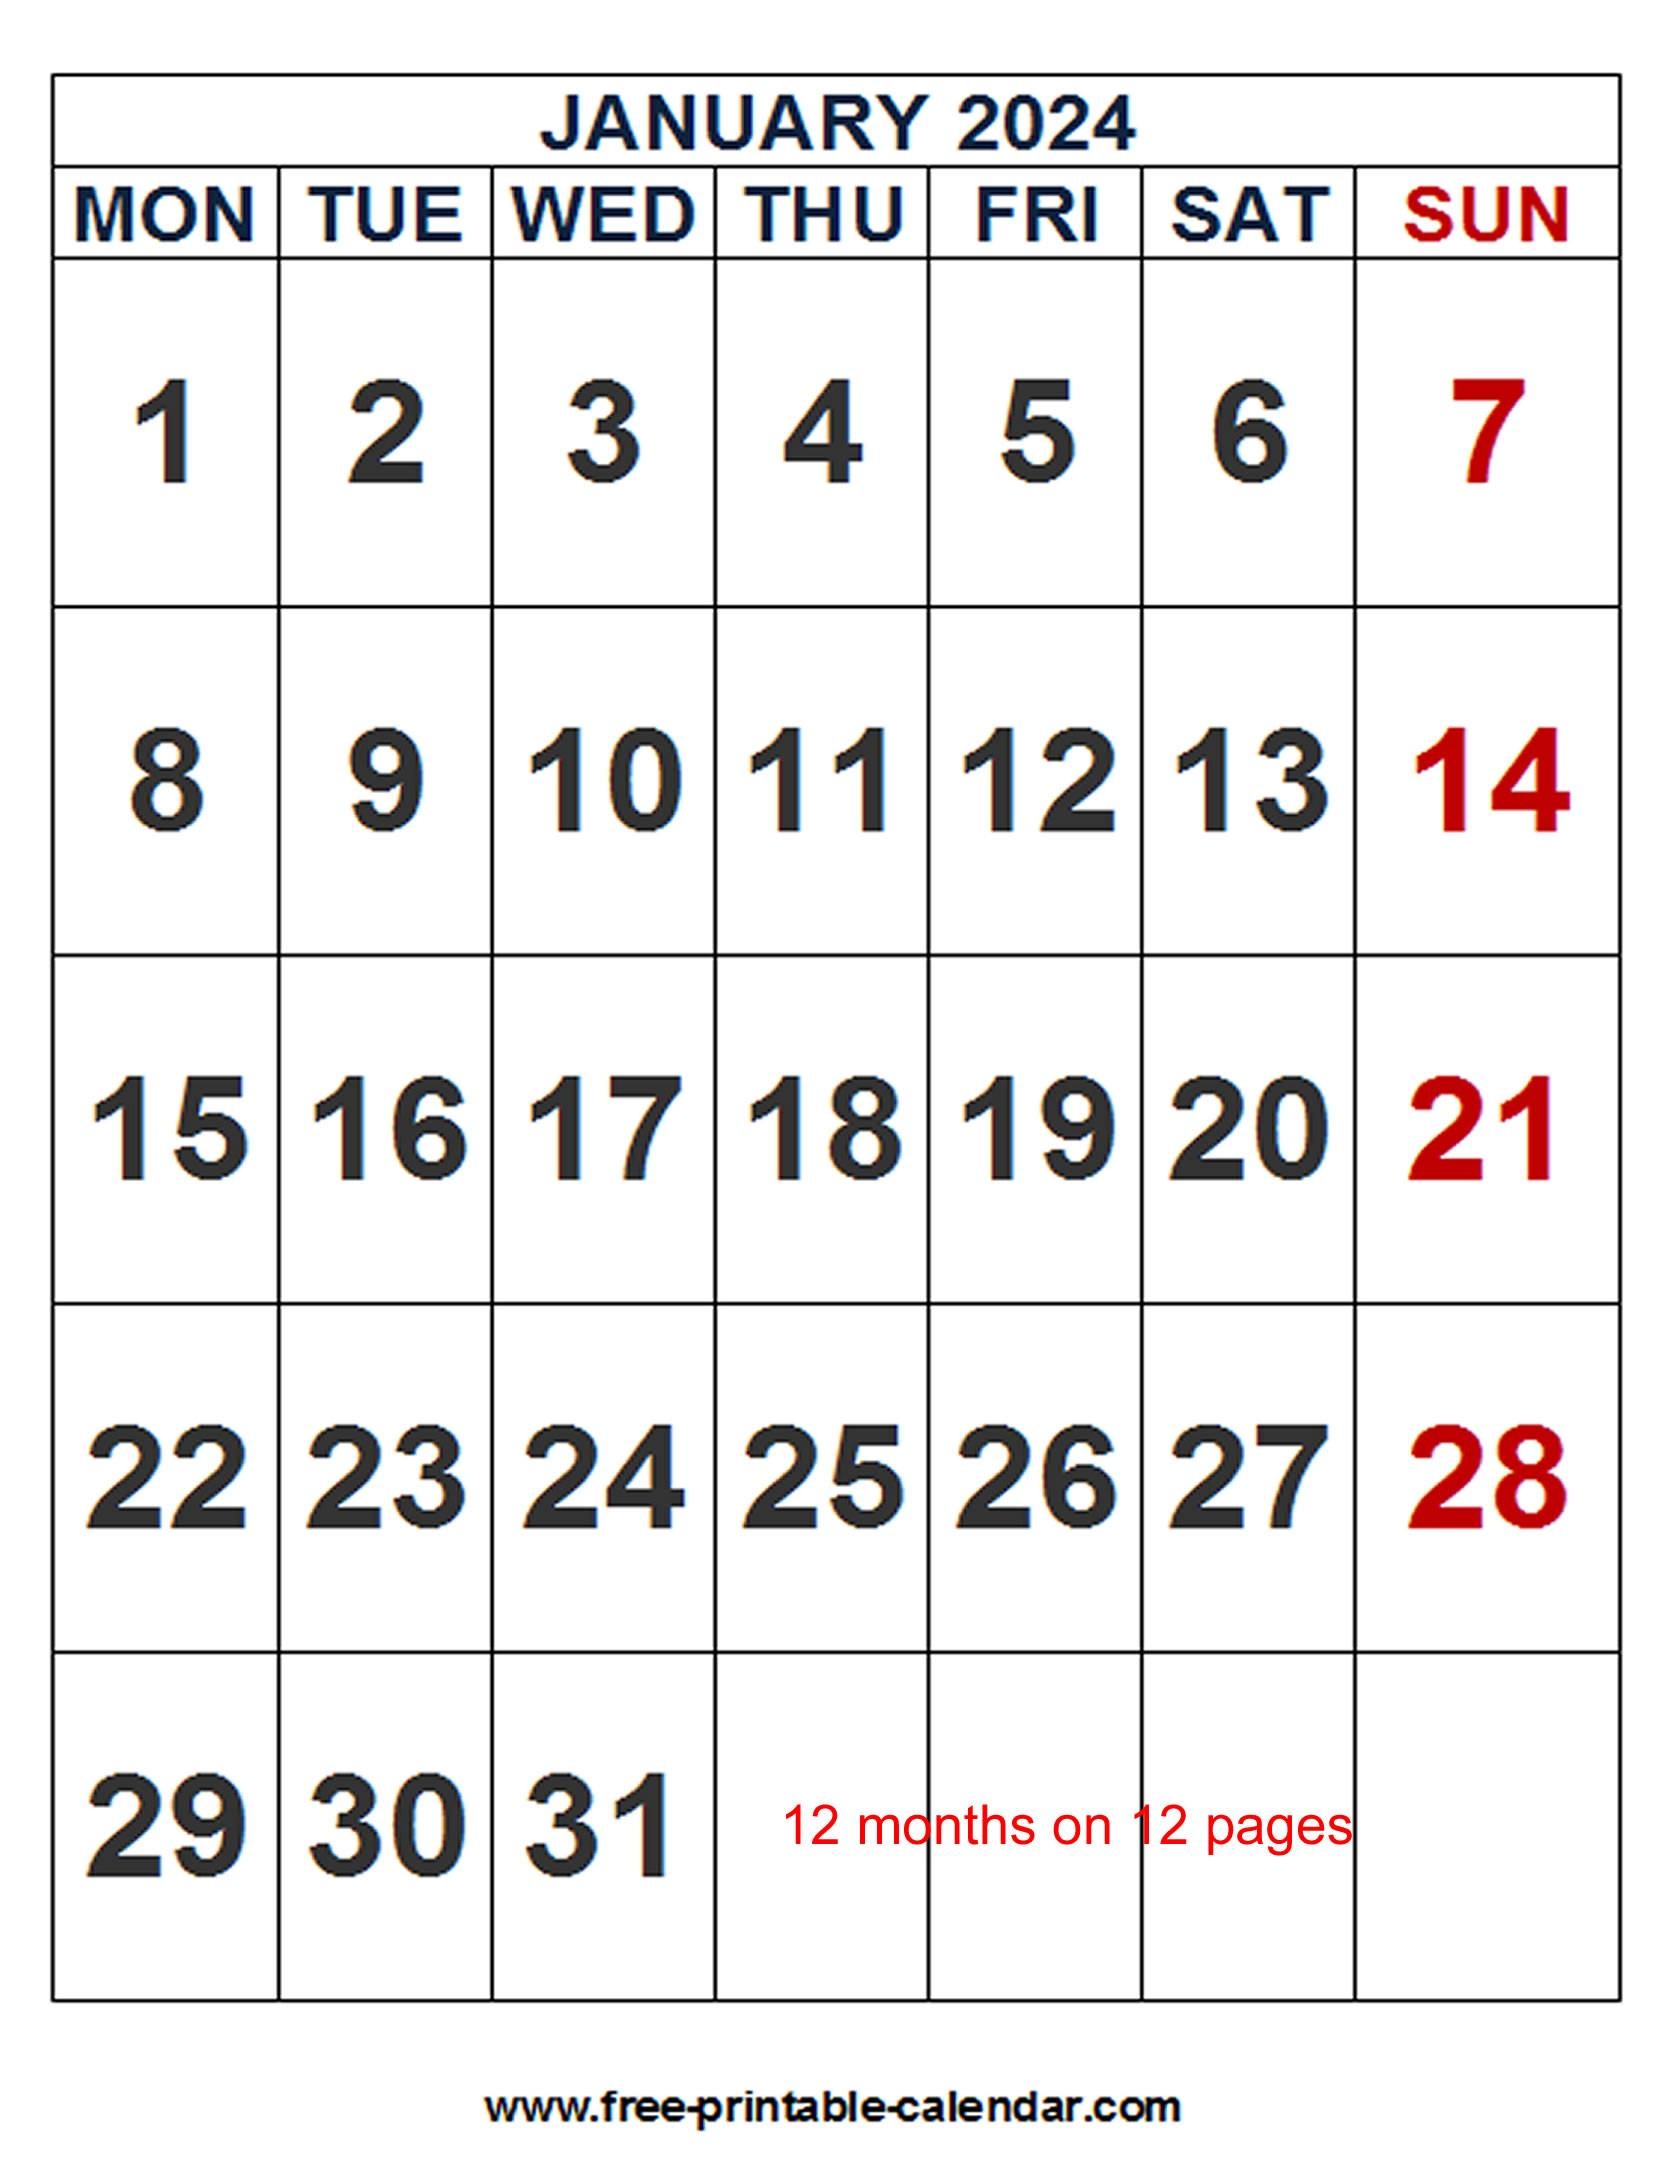 2024 Calendar Word Template - Free-Printable-Calendar pertaining to Free Printable Calendar 2024 Word Format